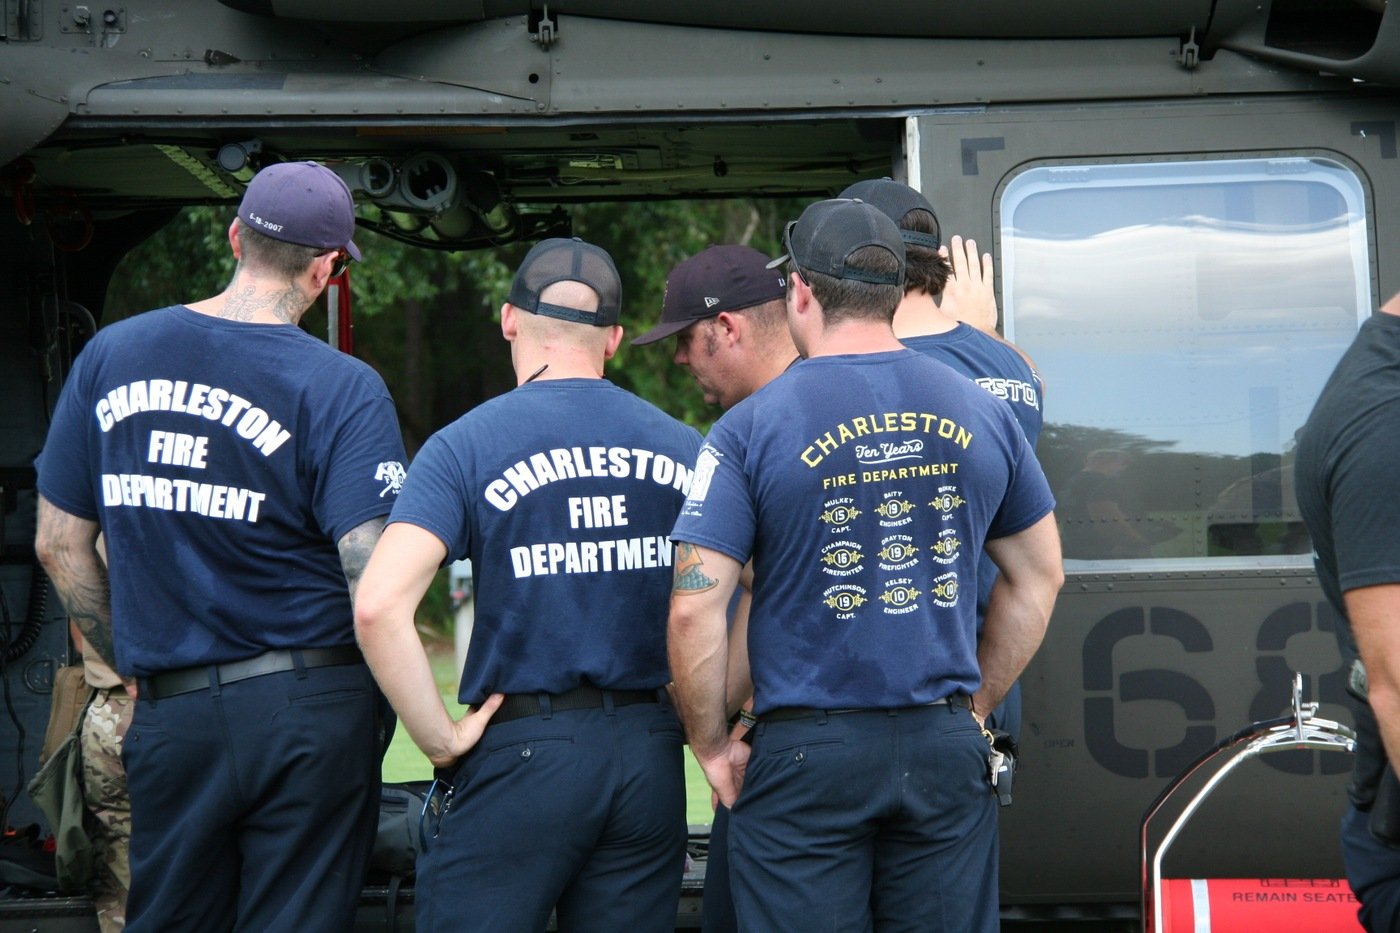 HRT Training: Charleston Fire Department